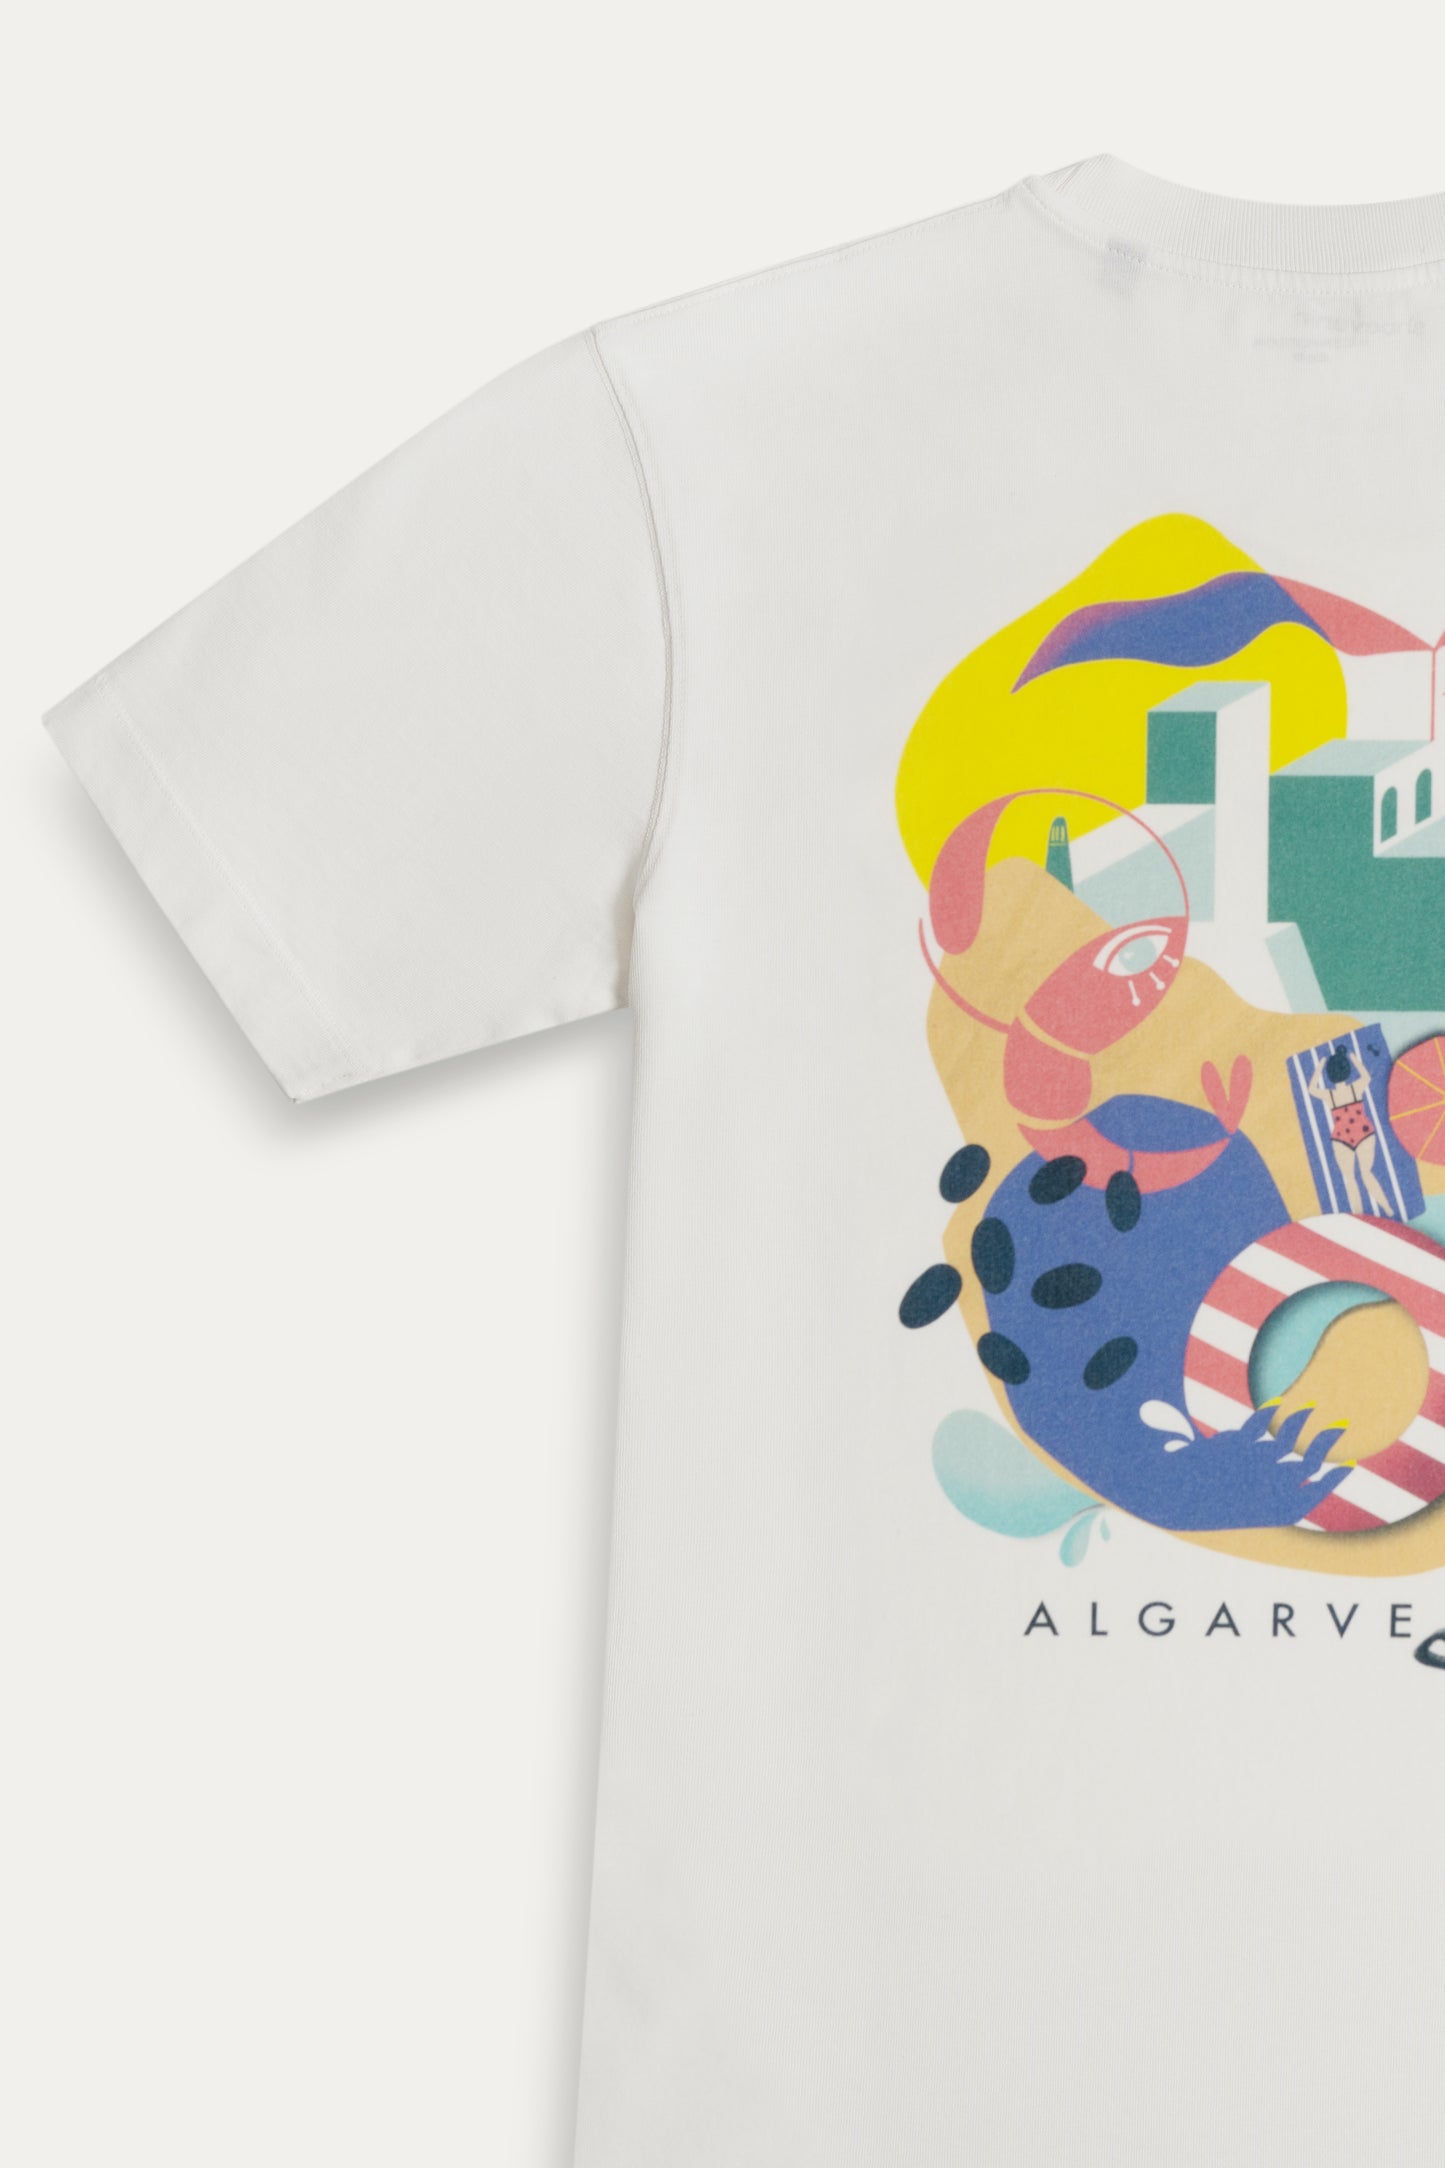 Algarve T-shirt